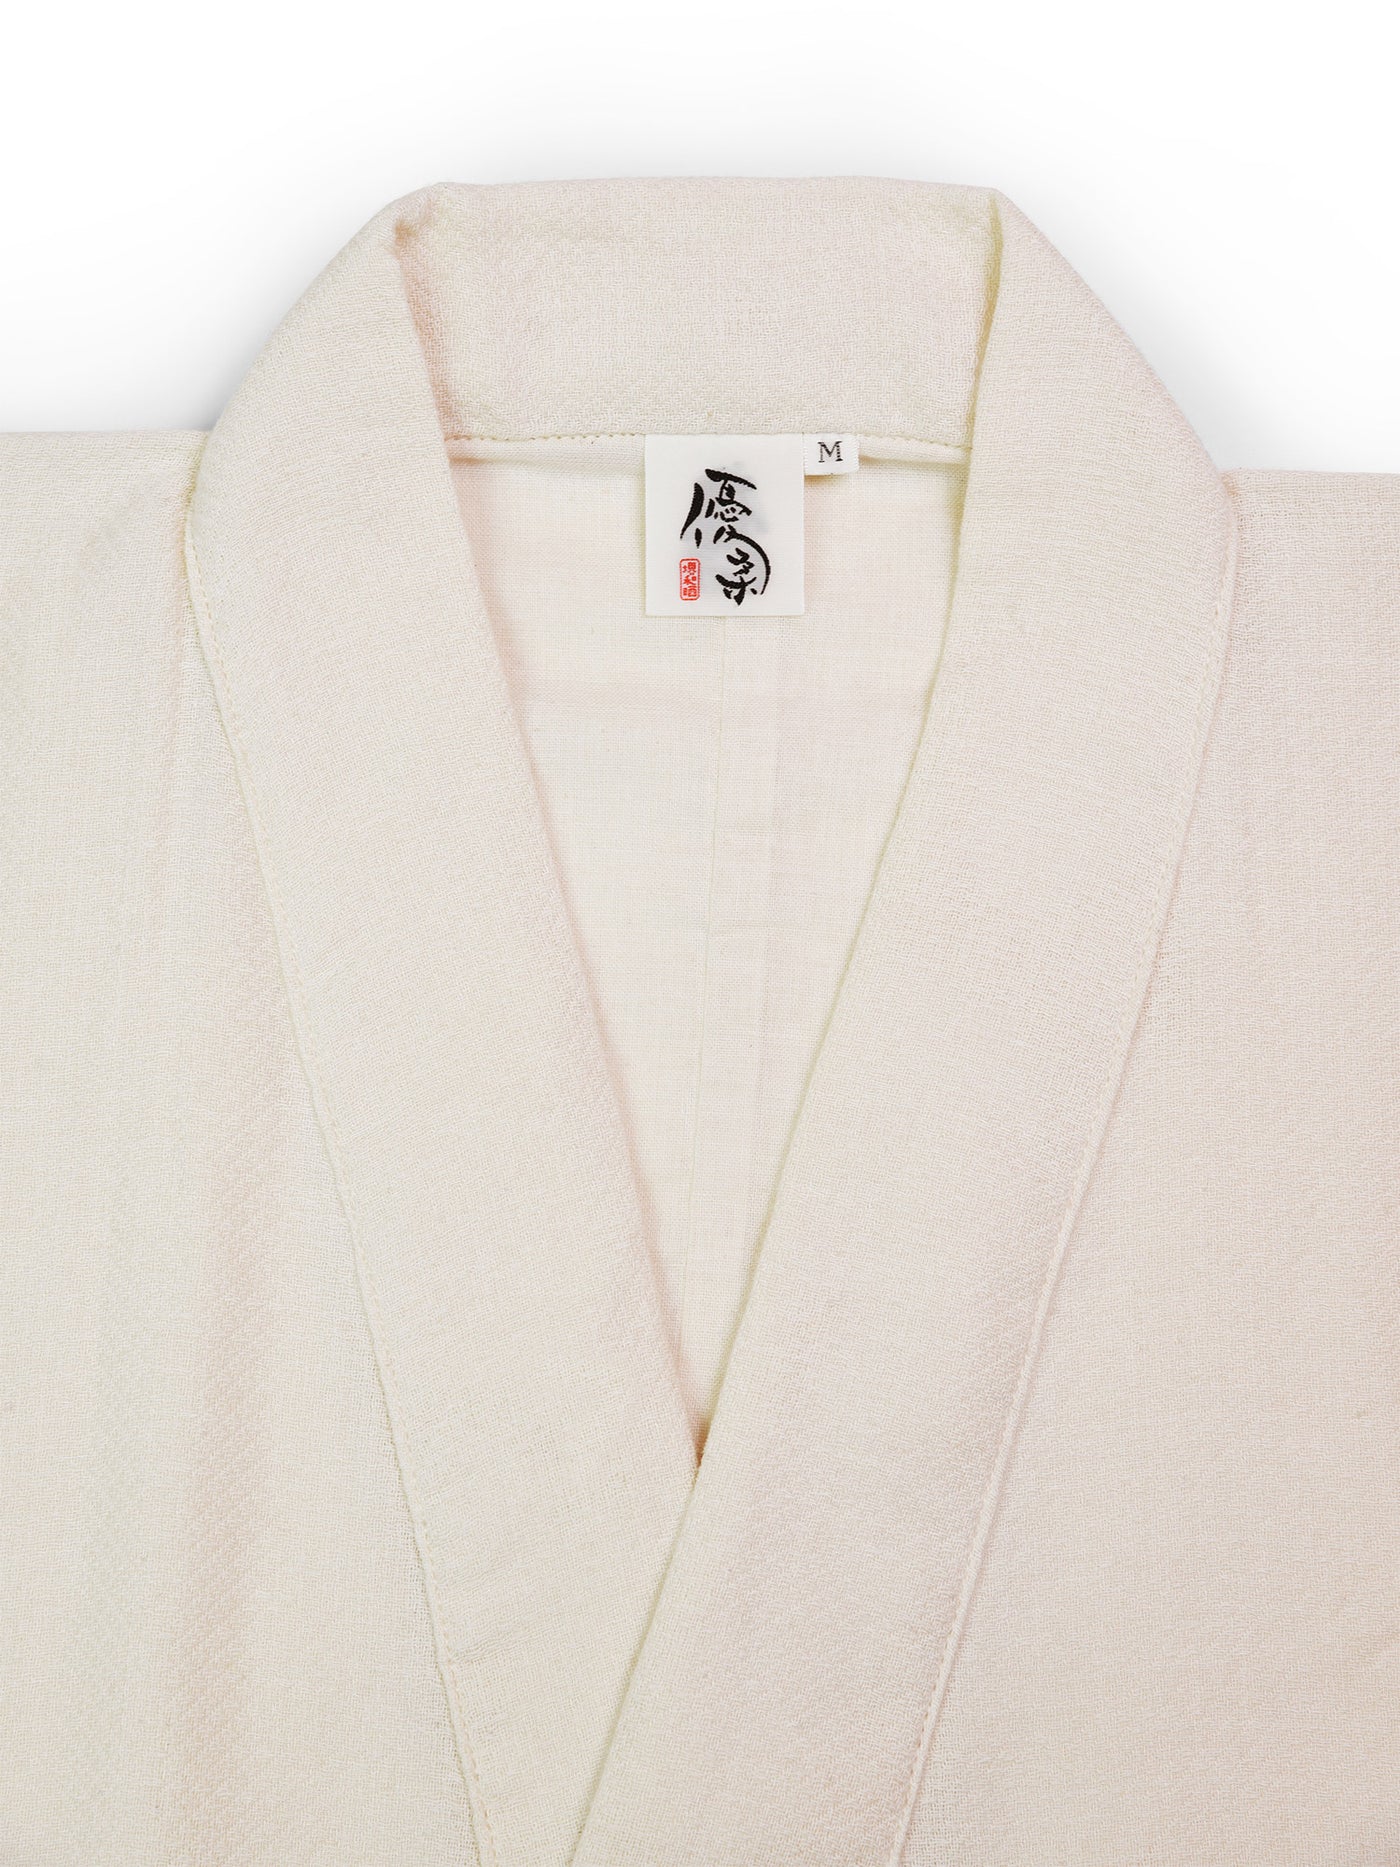 Samue Cotton Gauze Pajama Set in Ivory Jacket Collar